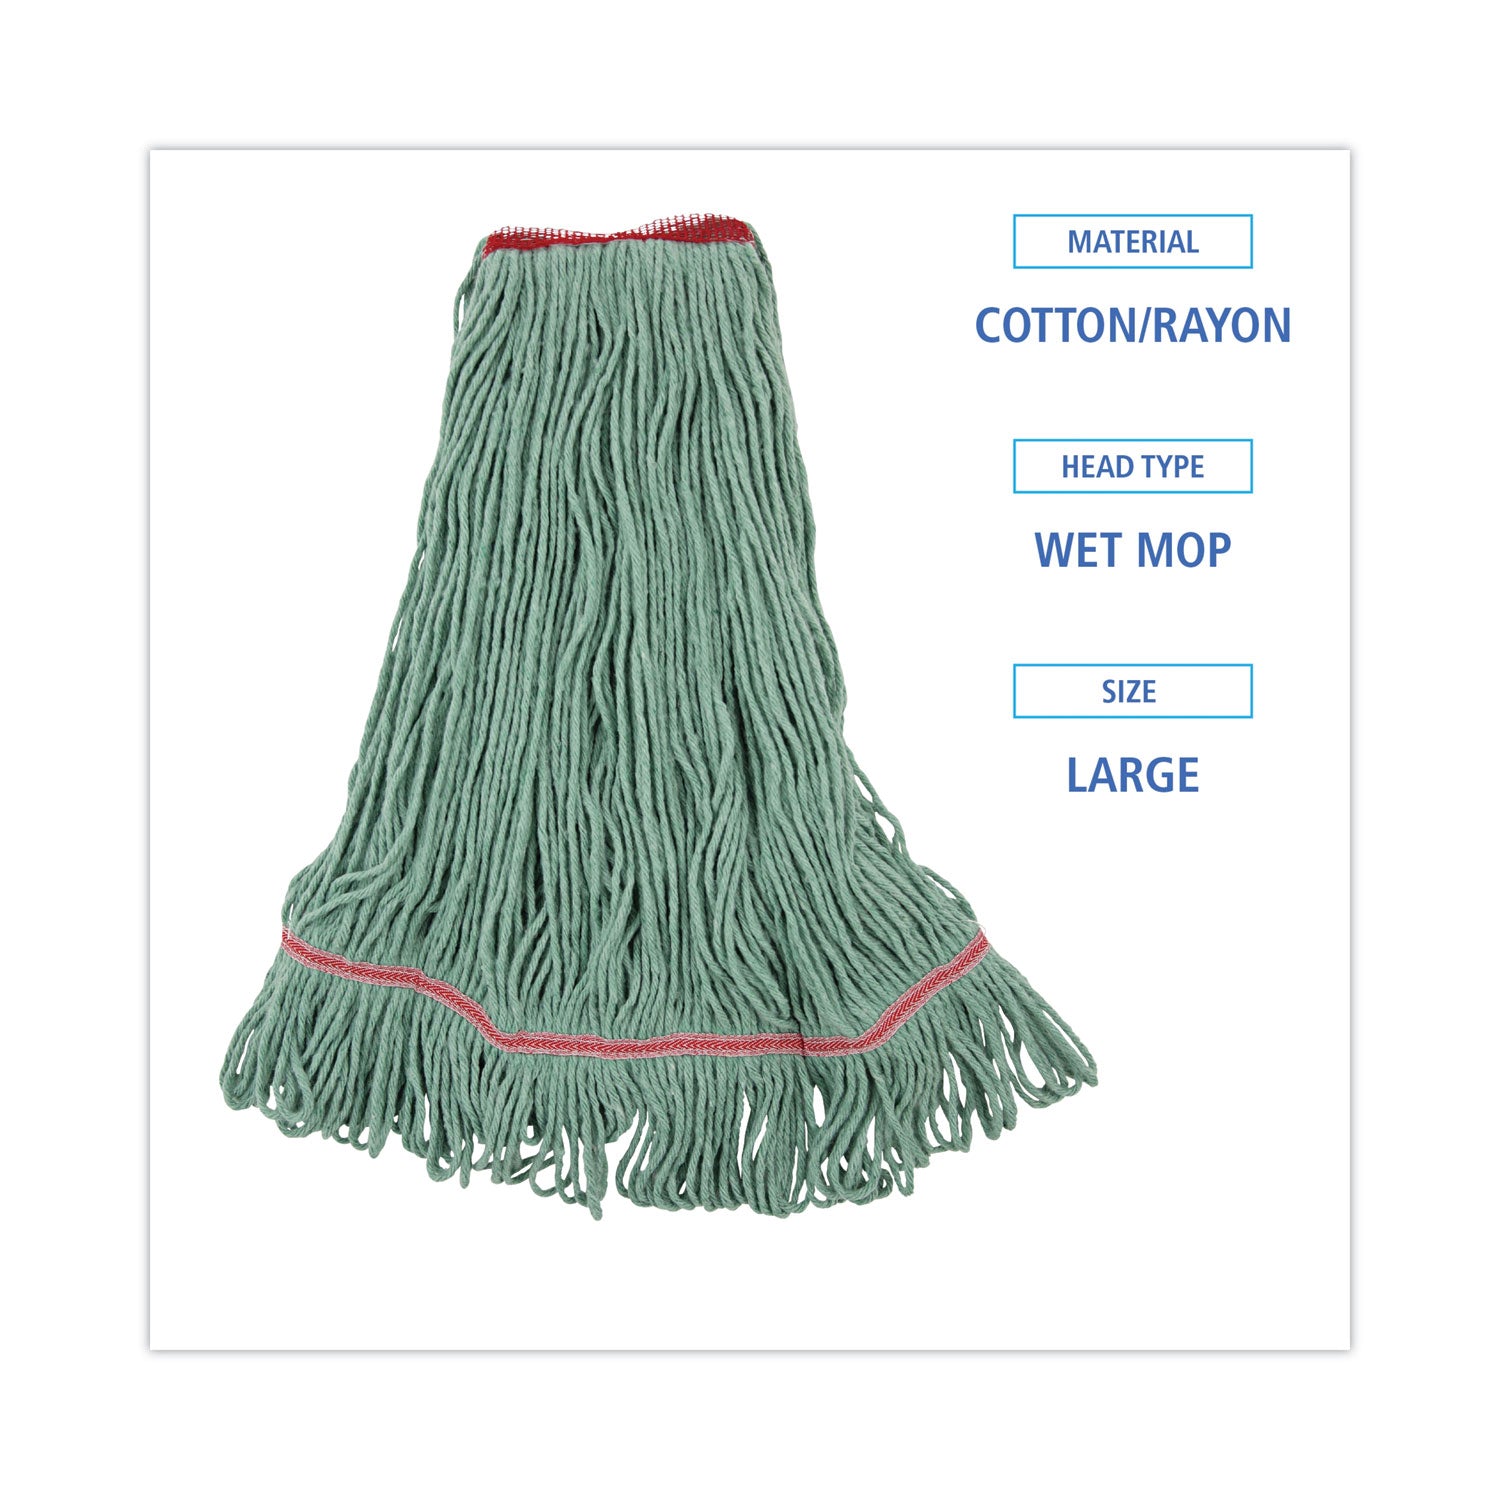 mop-head-premium-standard-head-cotton-rayon-fiber-large-green_bwk503gnnb - 2